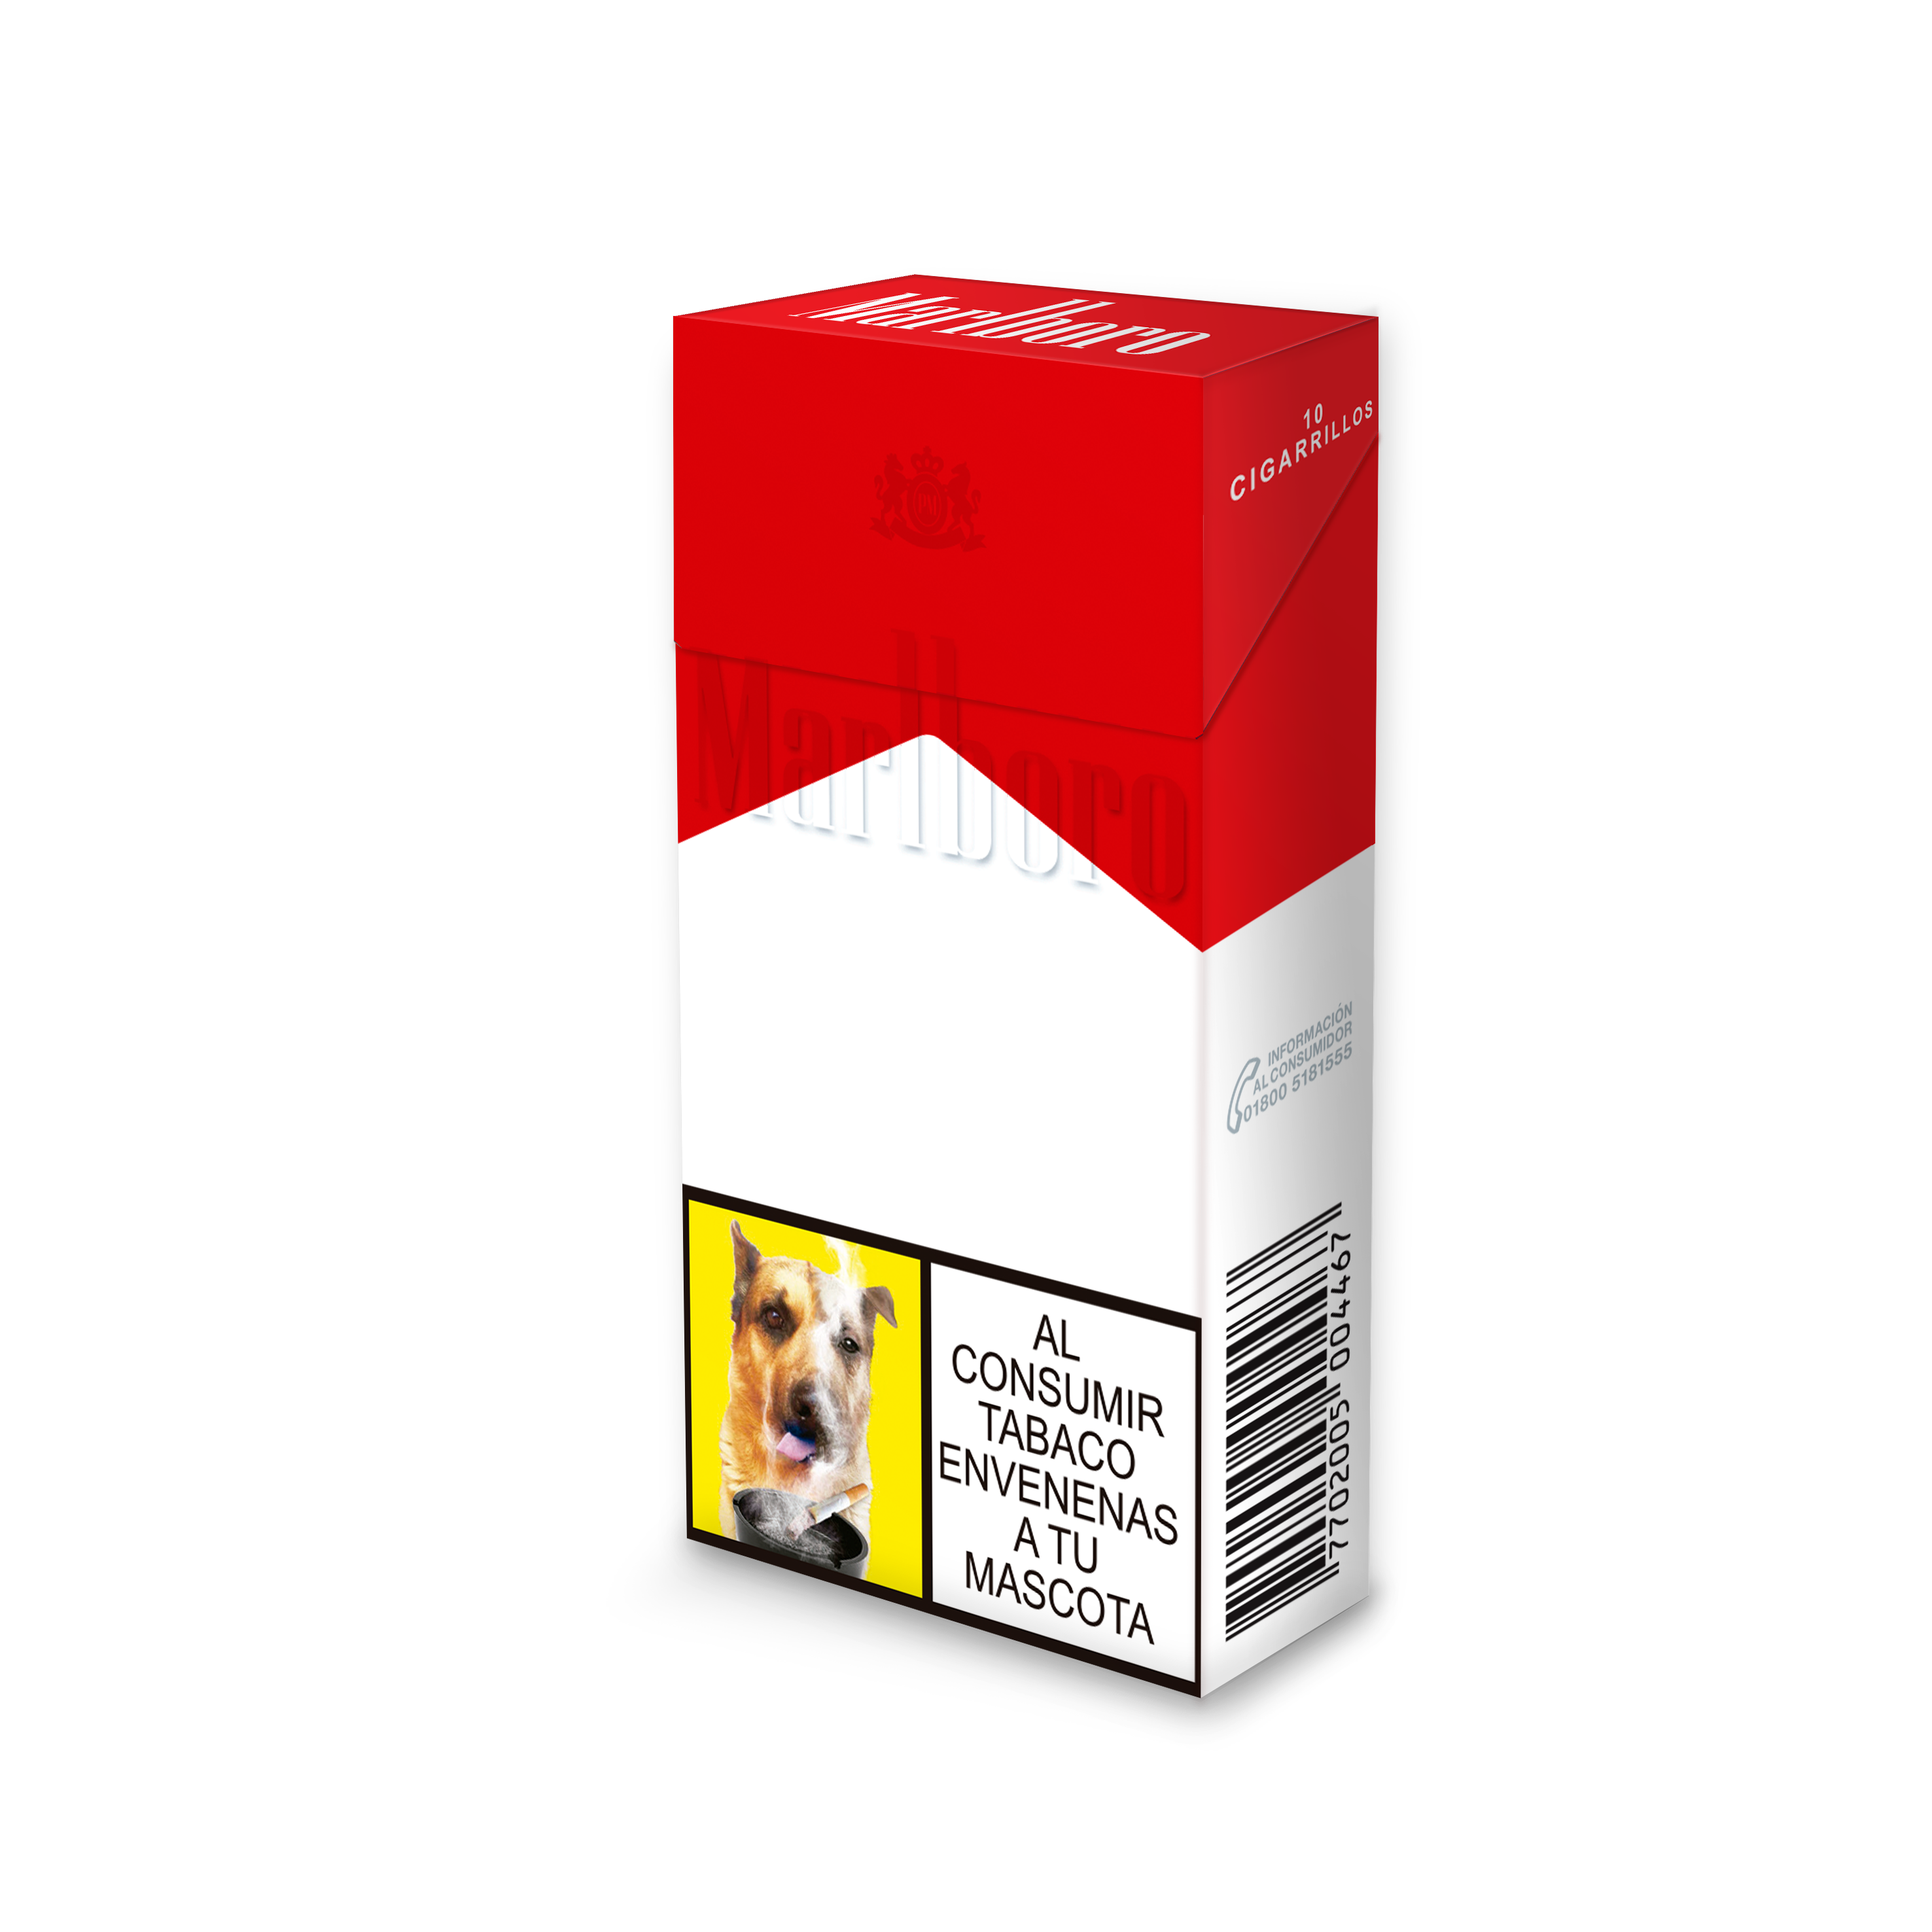 Cigarrillo Marlboro Rojo 2.0 Dorado 100dp x10un x10cig